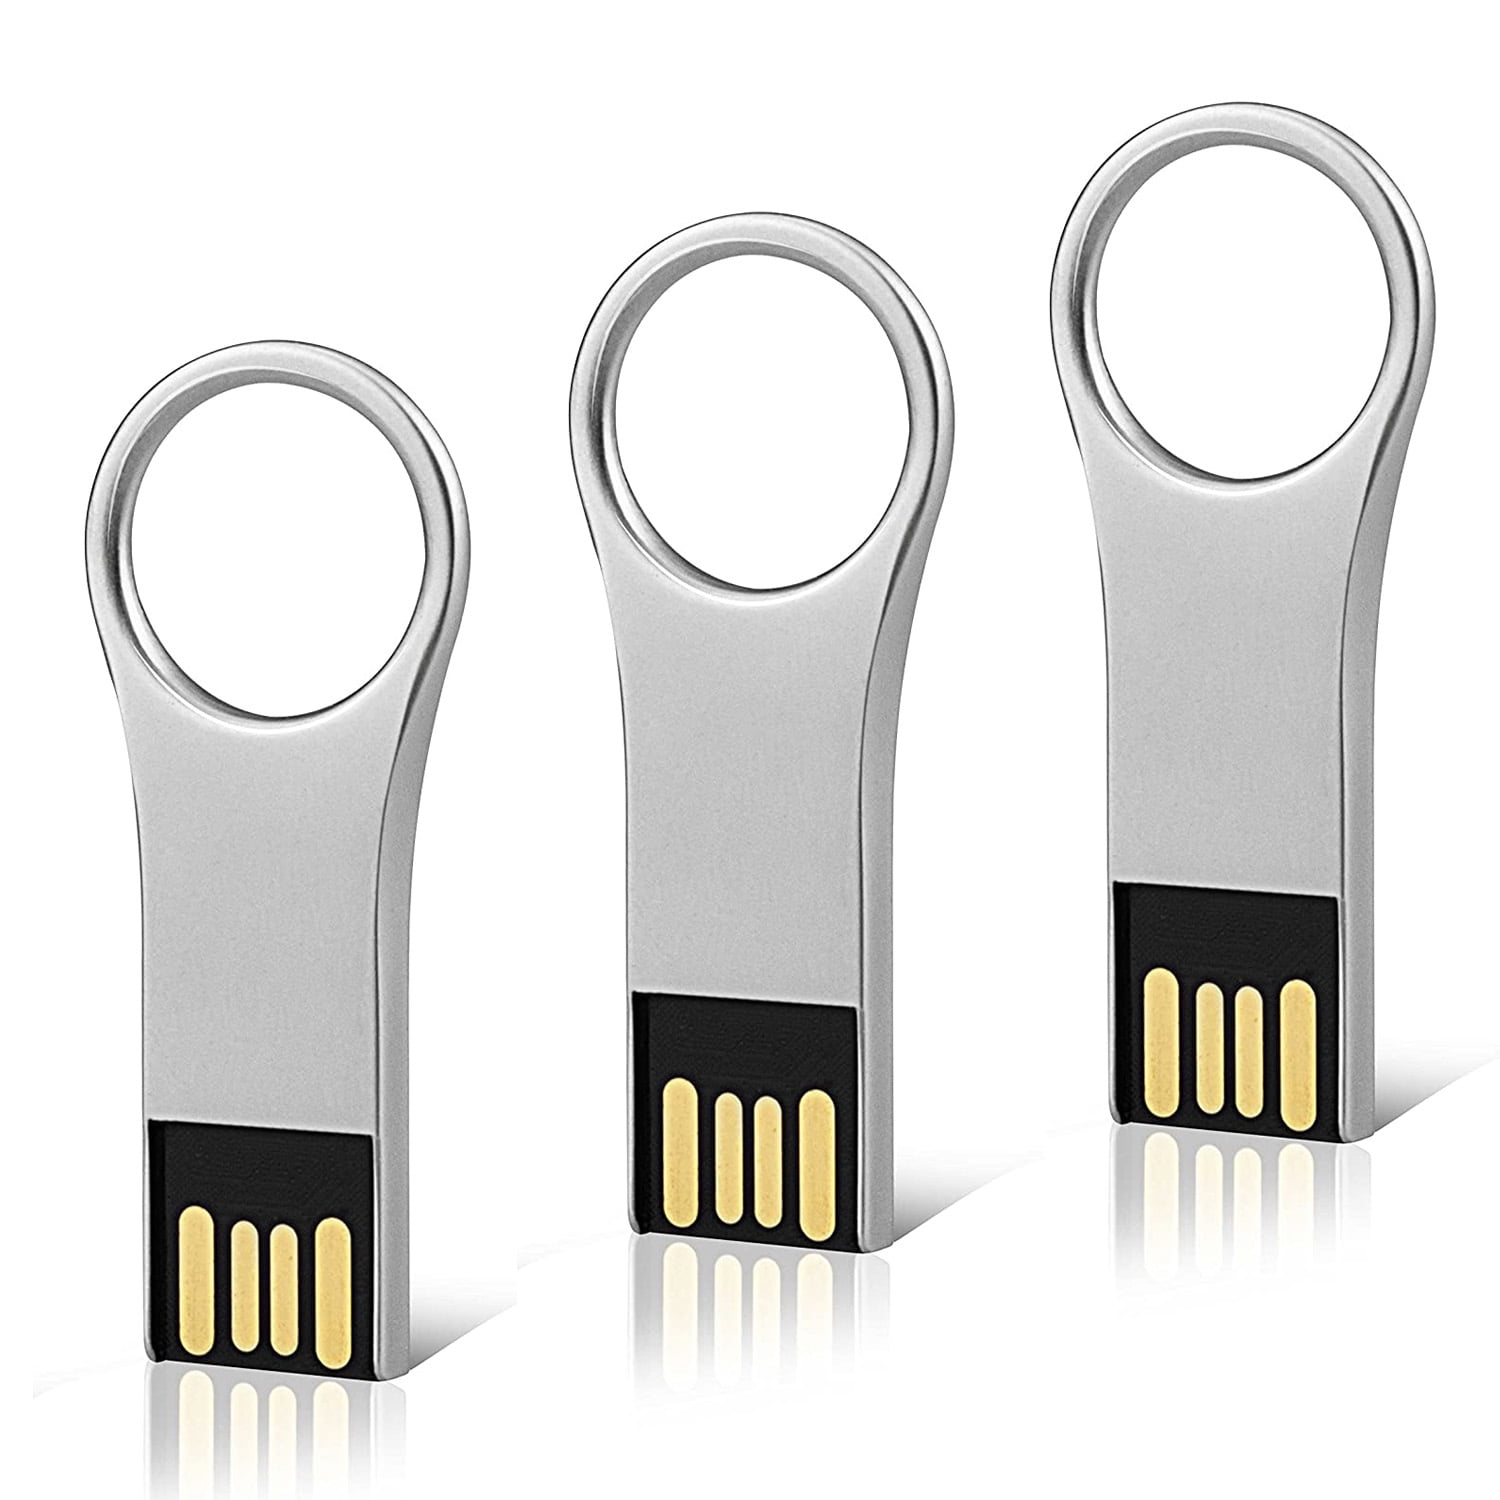 Cool Metal Bullet Model 32GB USB 2.0 Flash Drive Flash Memory Stick Thumb Drive 